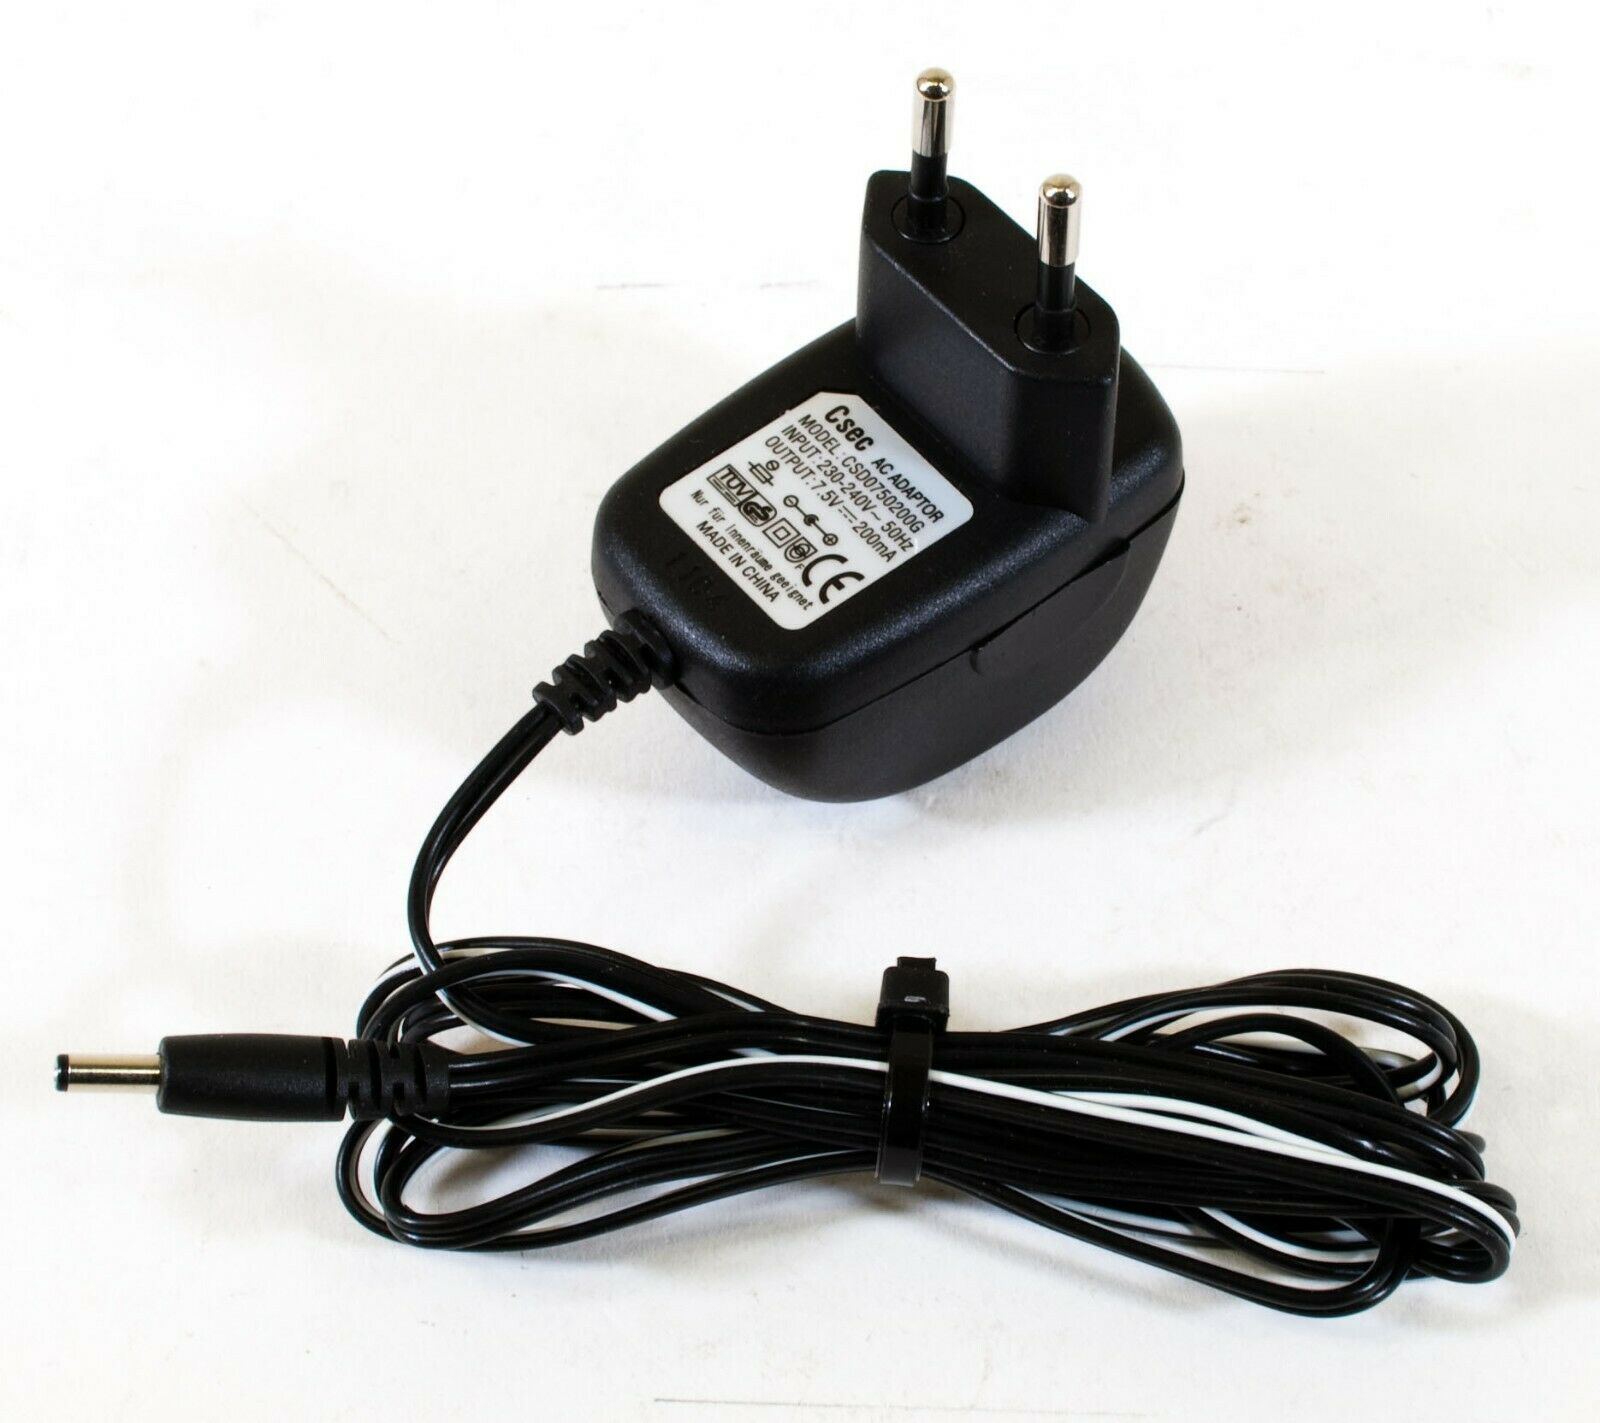 Csec CSD0750200G AC Adapter 7.5V 200mA Original Power Supply Europlug Output Current: 200 mA MPN: CSD0750200G Brand: